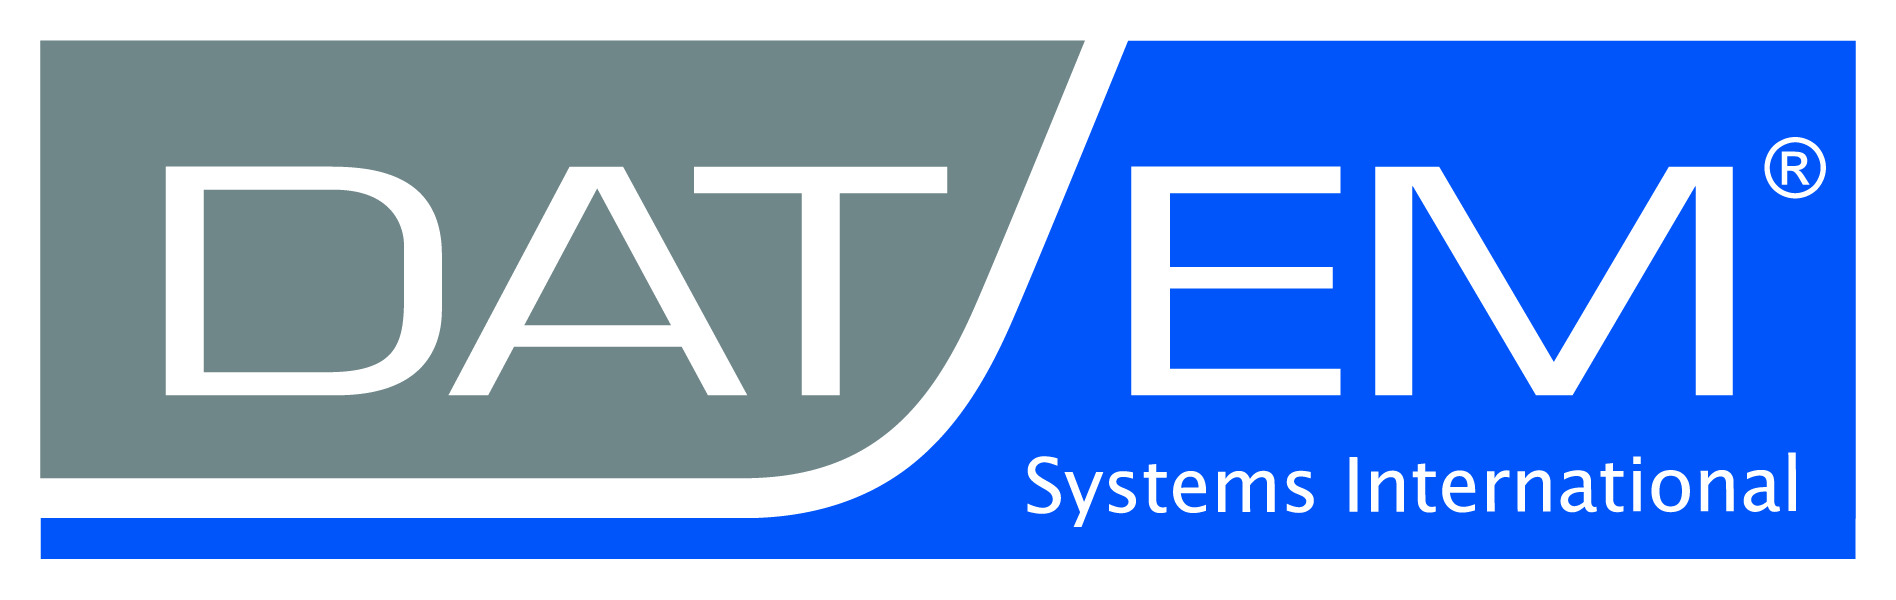 Системы int. Camp Systems International Inc. лого. Woodfield Systems International лого. Лого IFAT International. Imex логотип.